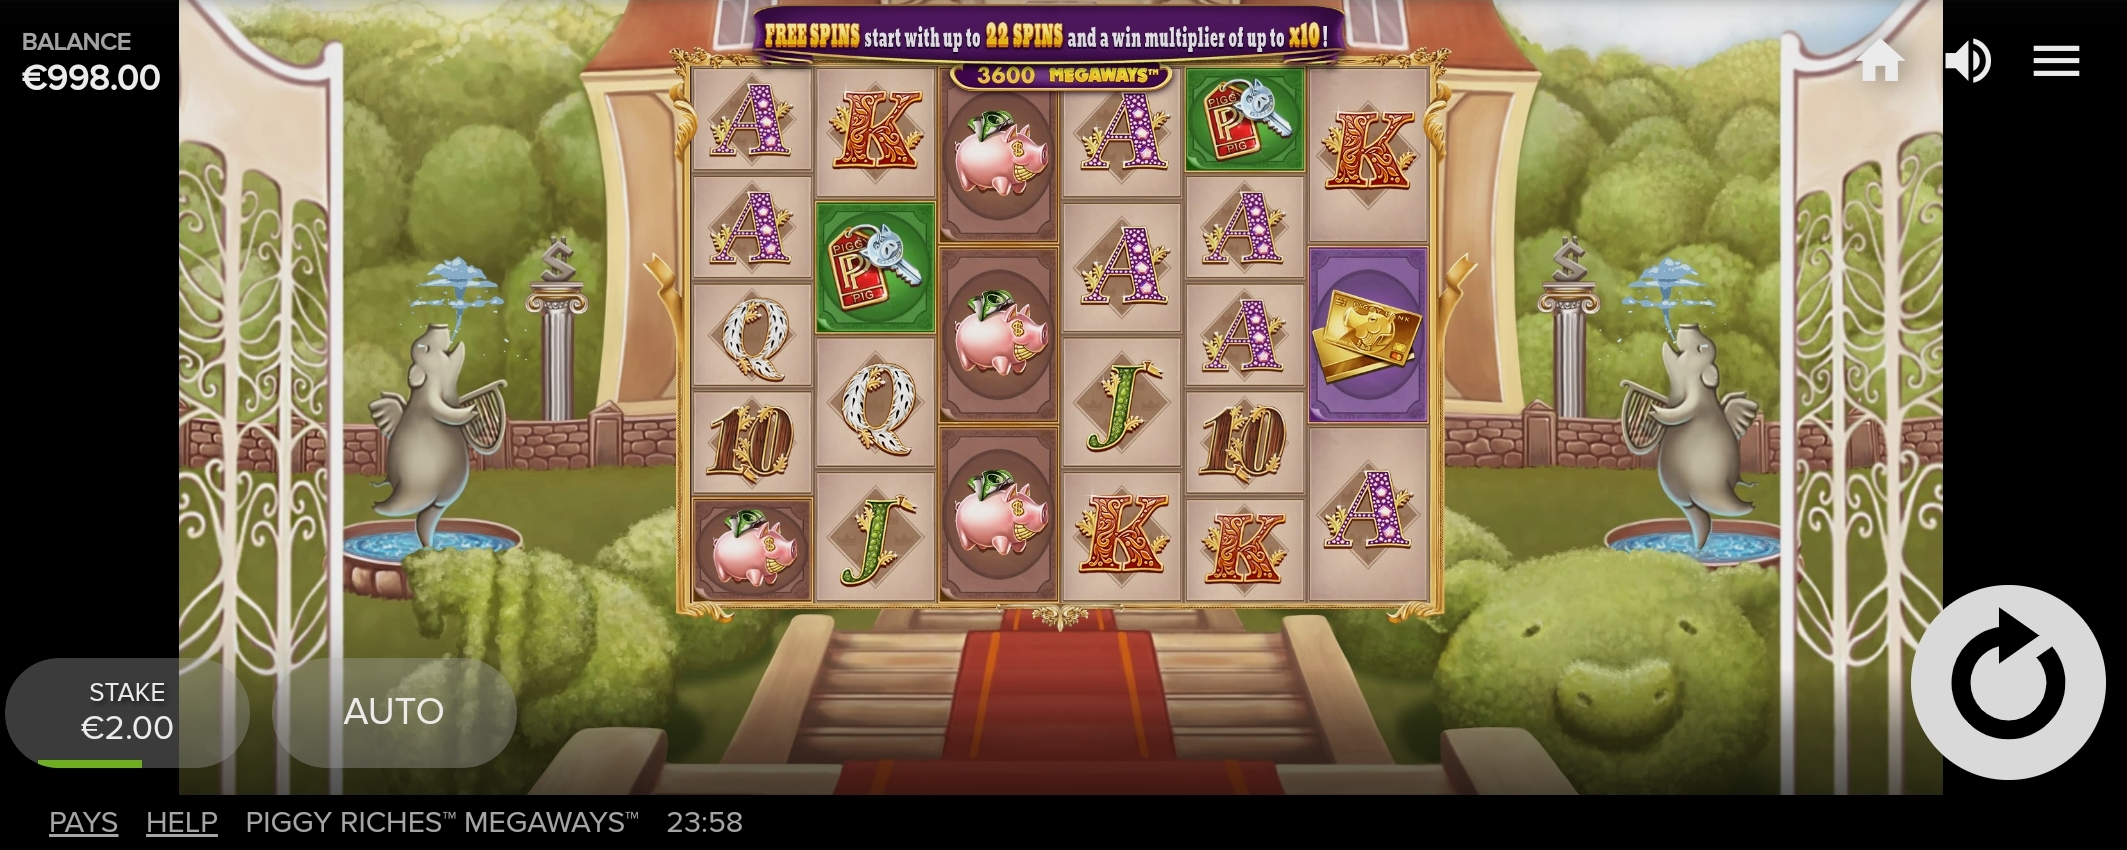 Reel Tastic Casino Mobile Slot Games Review